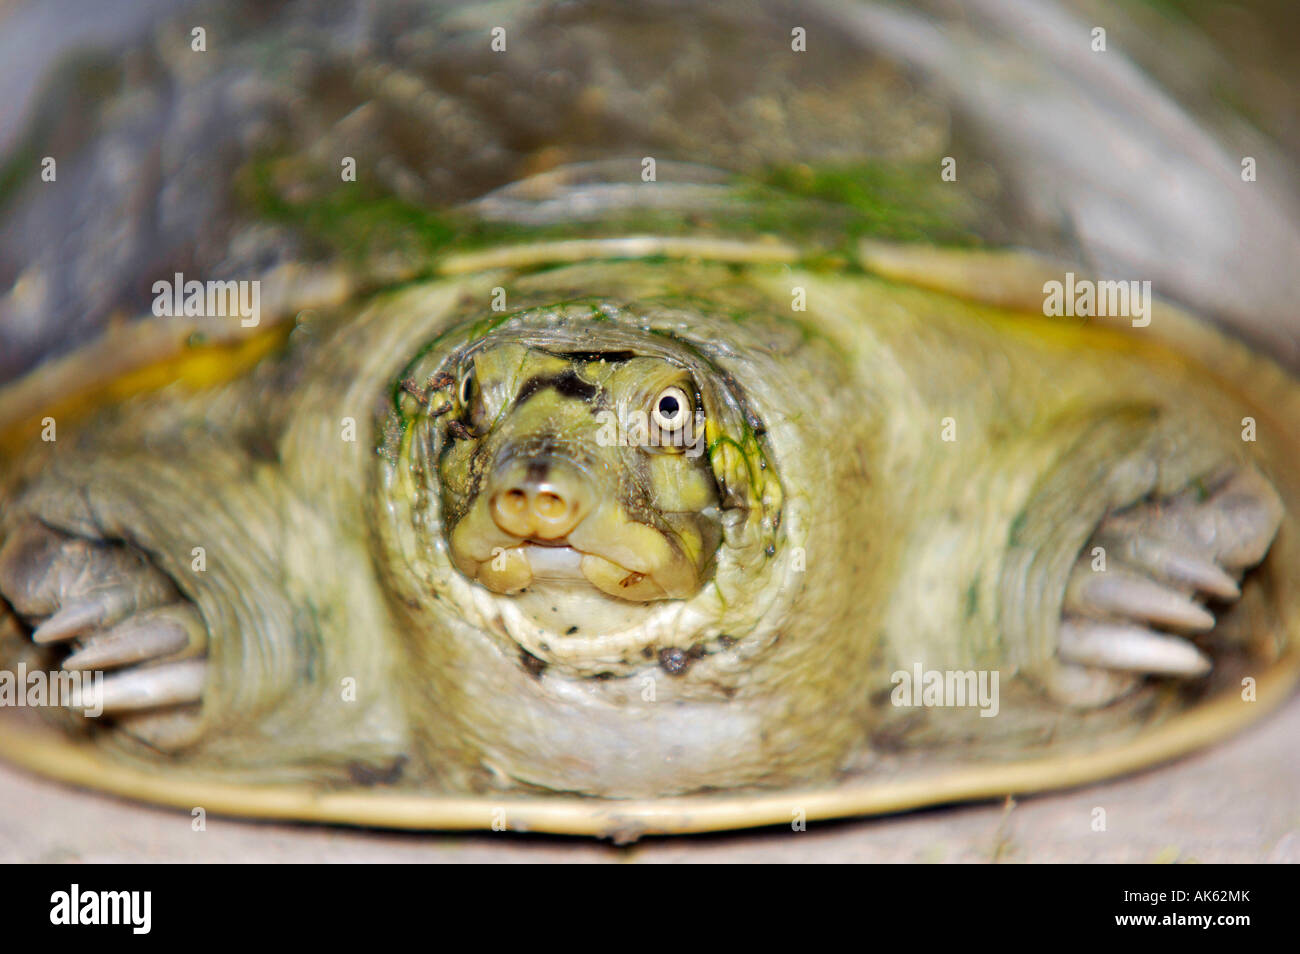 Indian Flapshell Turtle Stock Photo